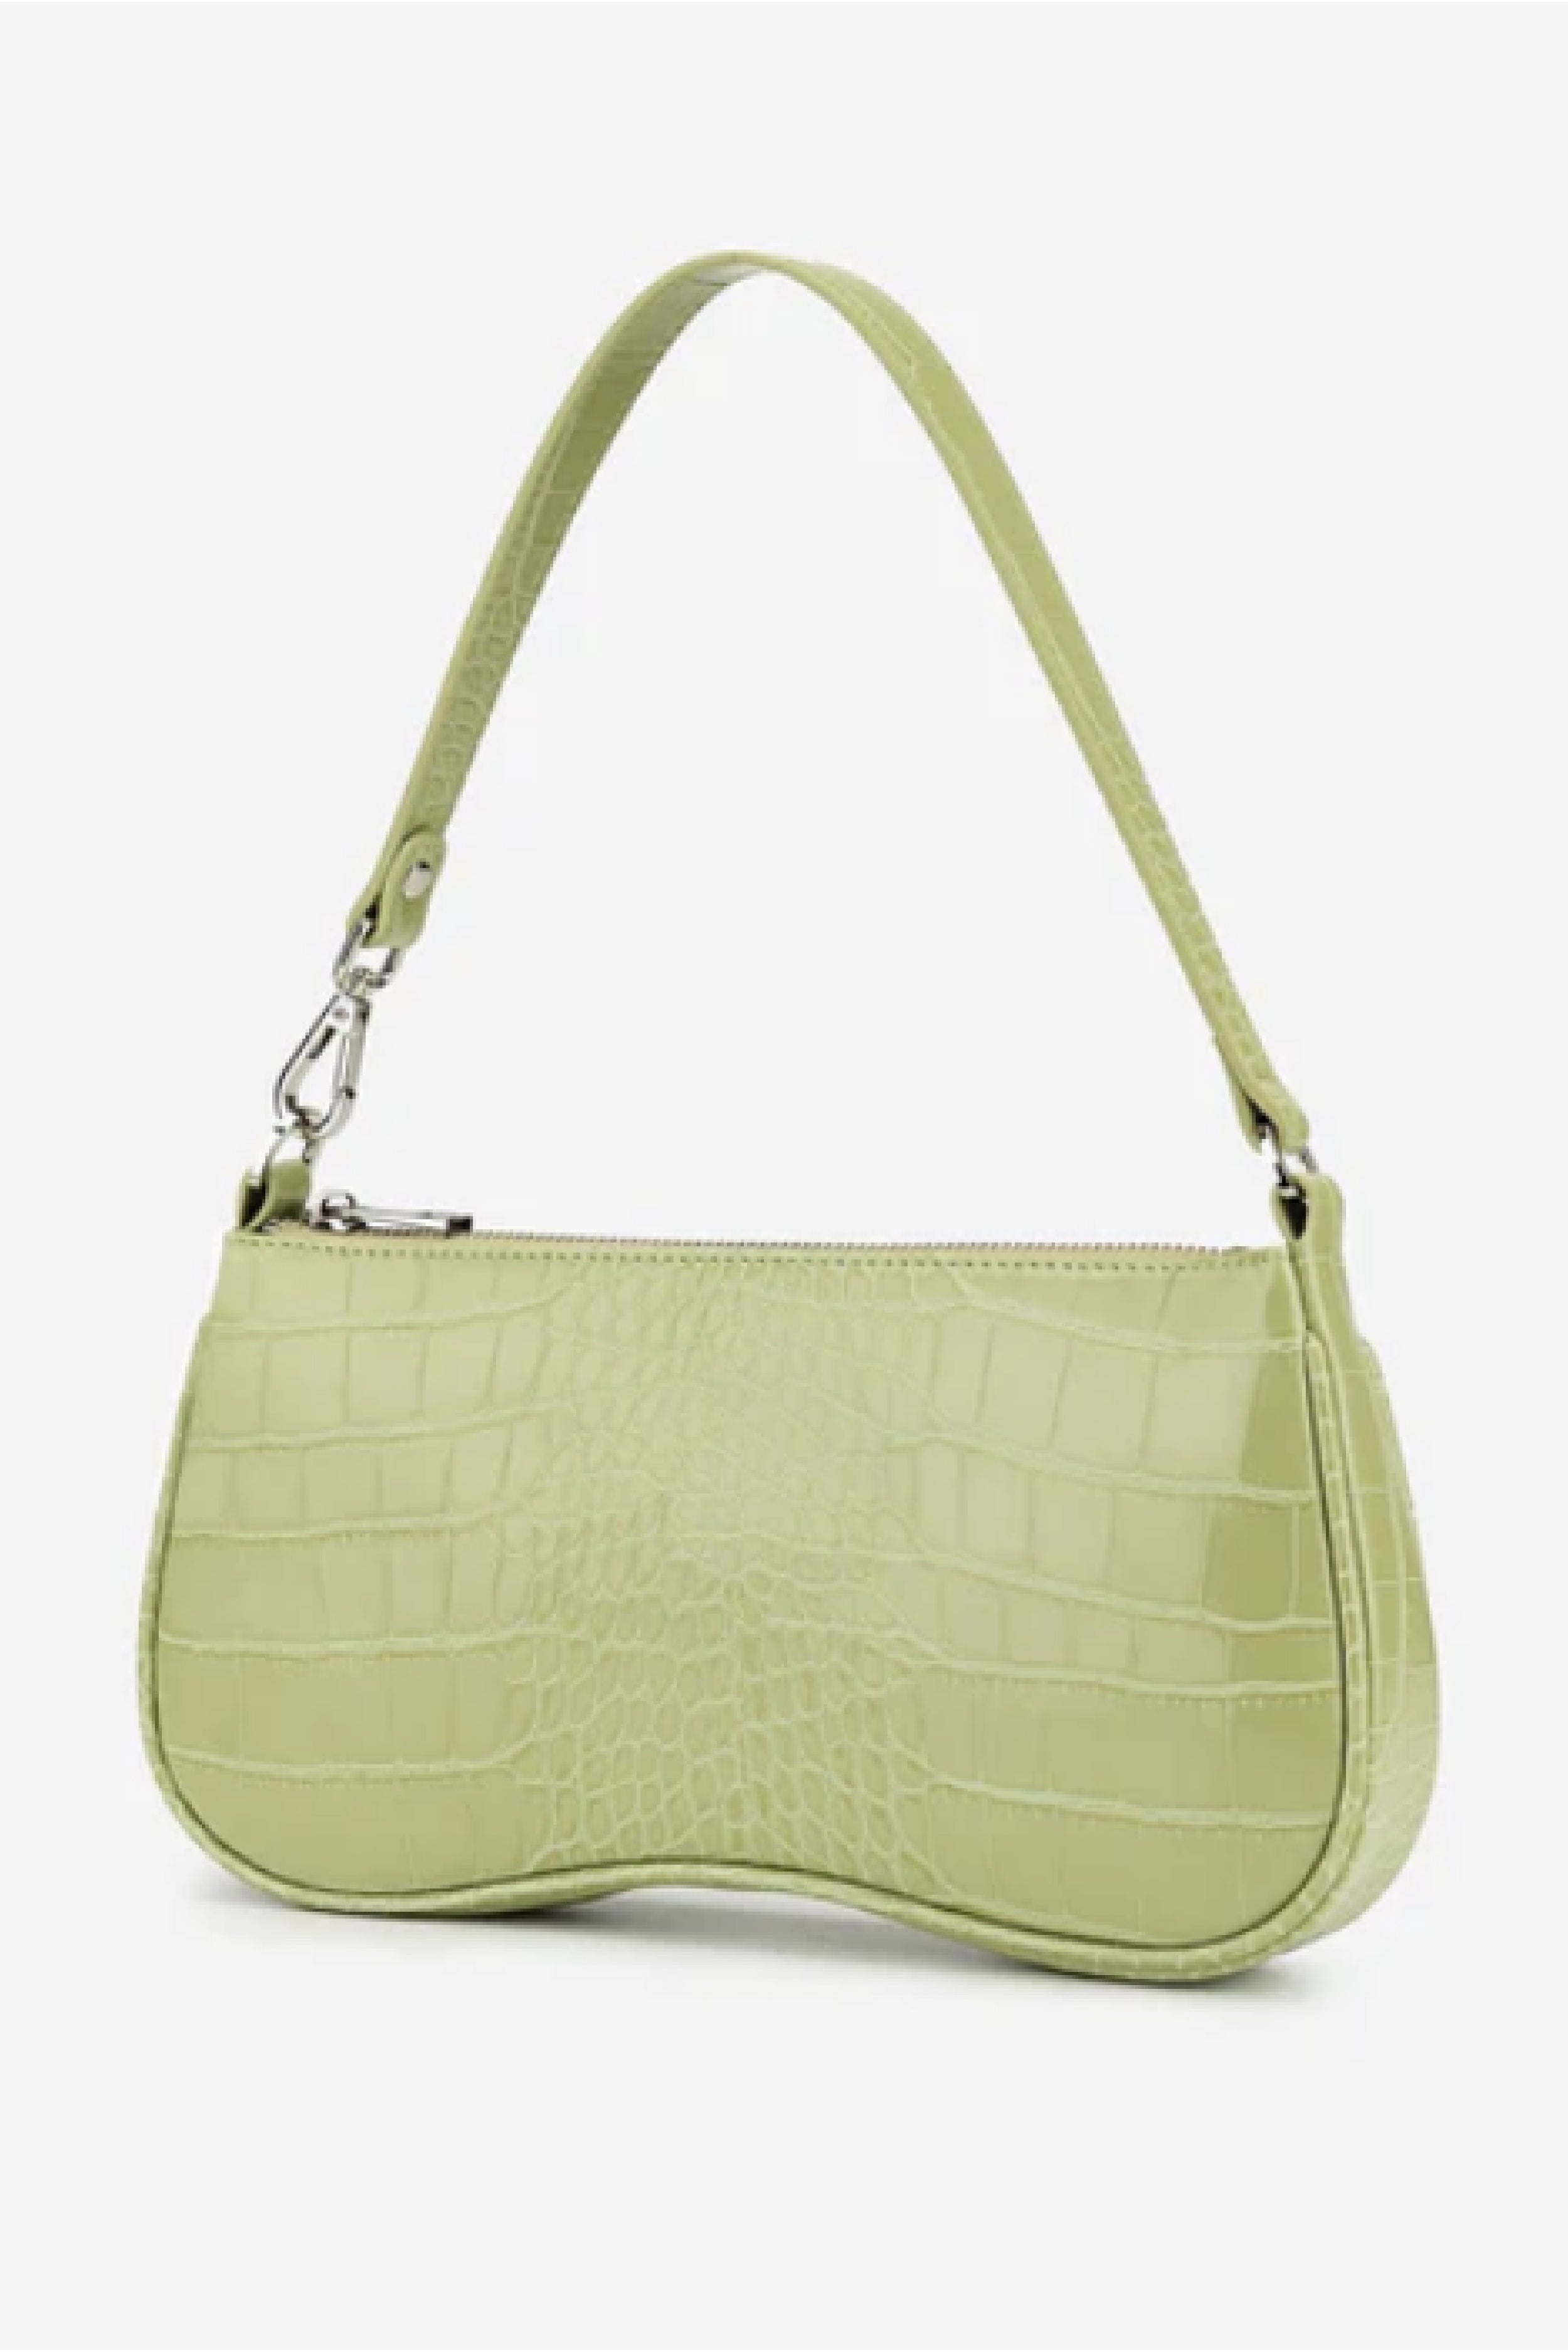 JW PEI Eva Shoulder Bag Sage Green Croc